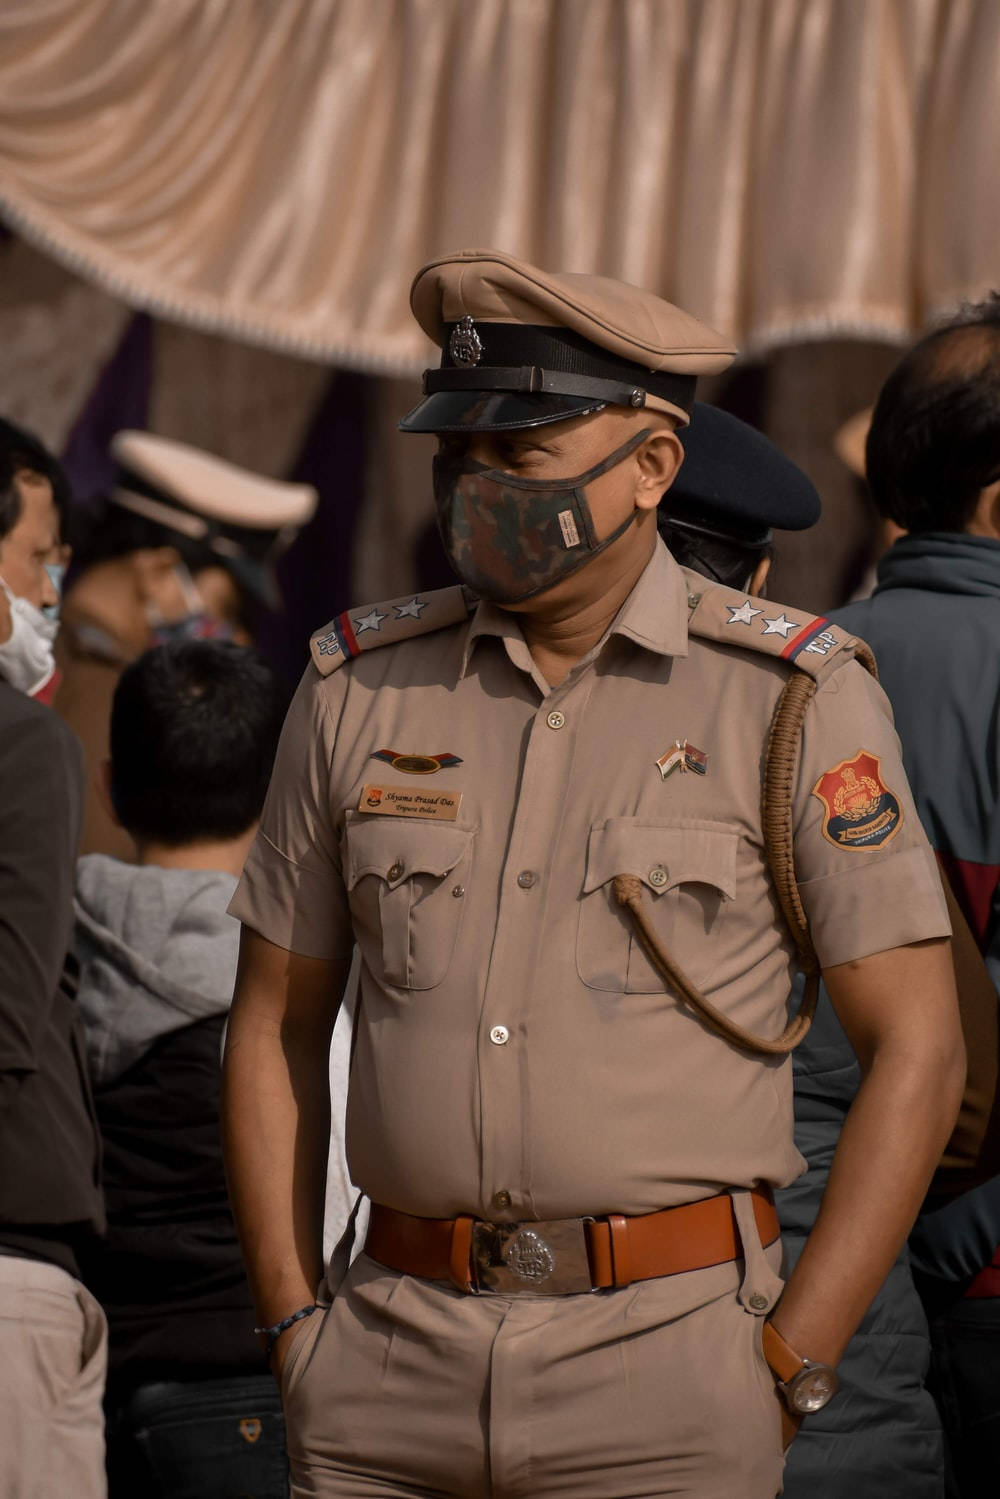 Caption: Indian Police Commander In Uniform Background